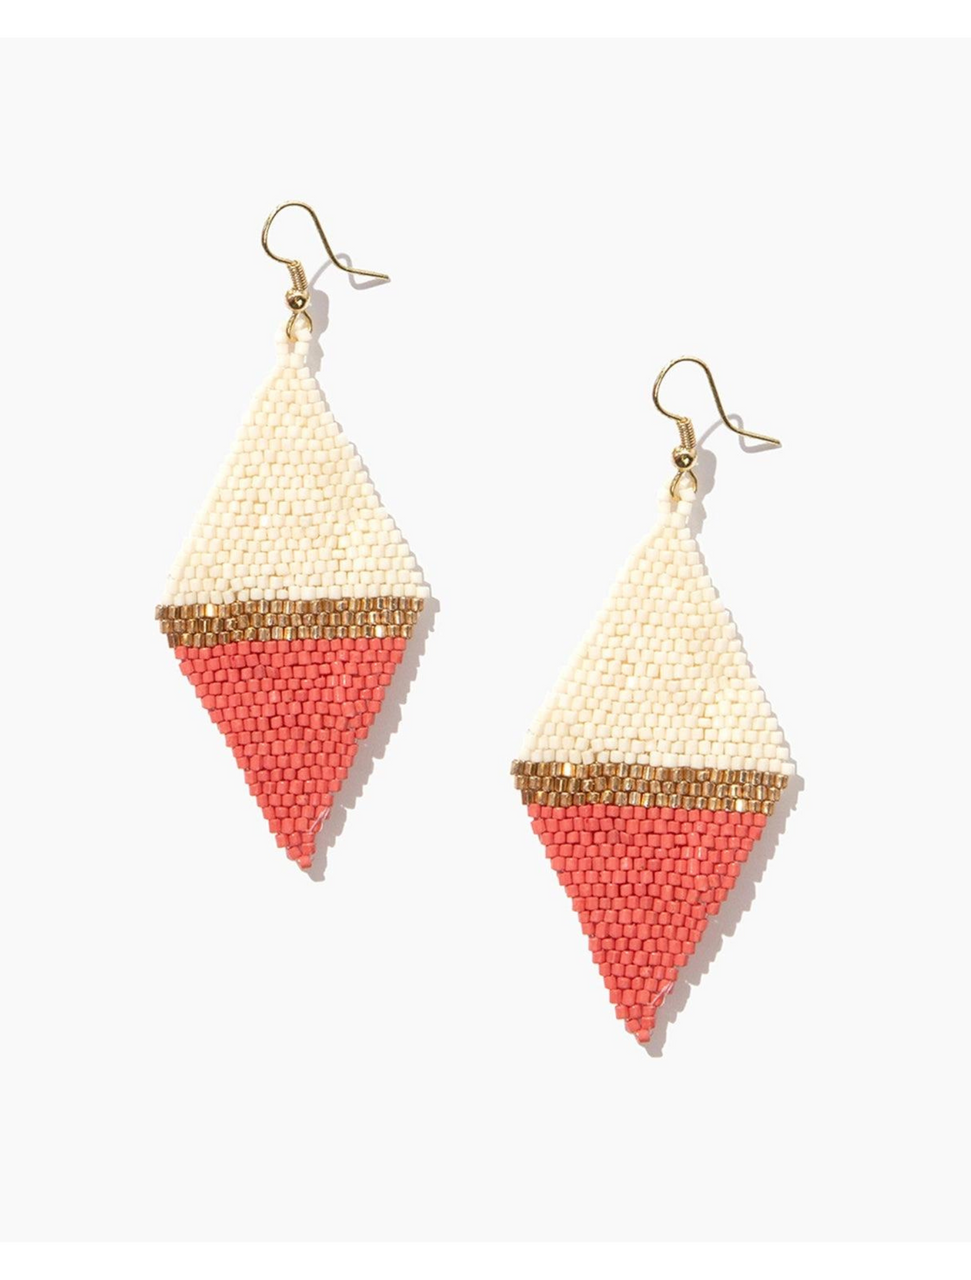 Pierce & Hide Diamond Beaded Earring - 5 Colors